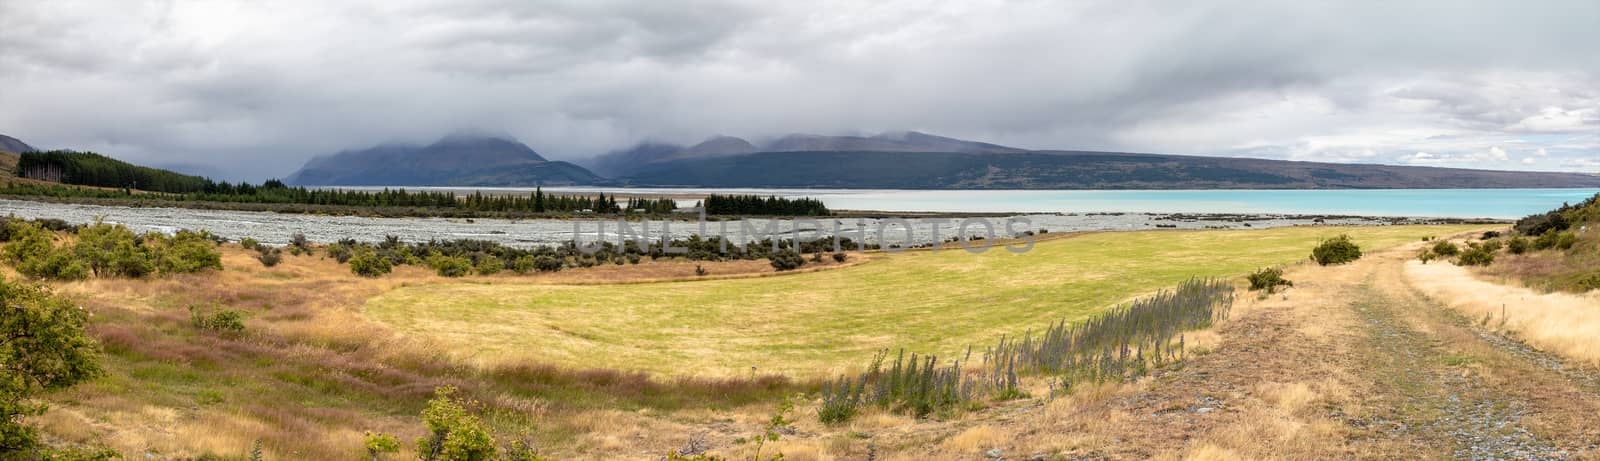 An image of a rainy day at Lake Pukaki New Zealand